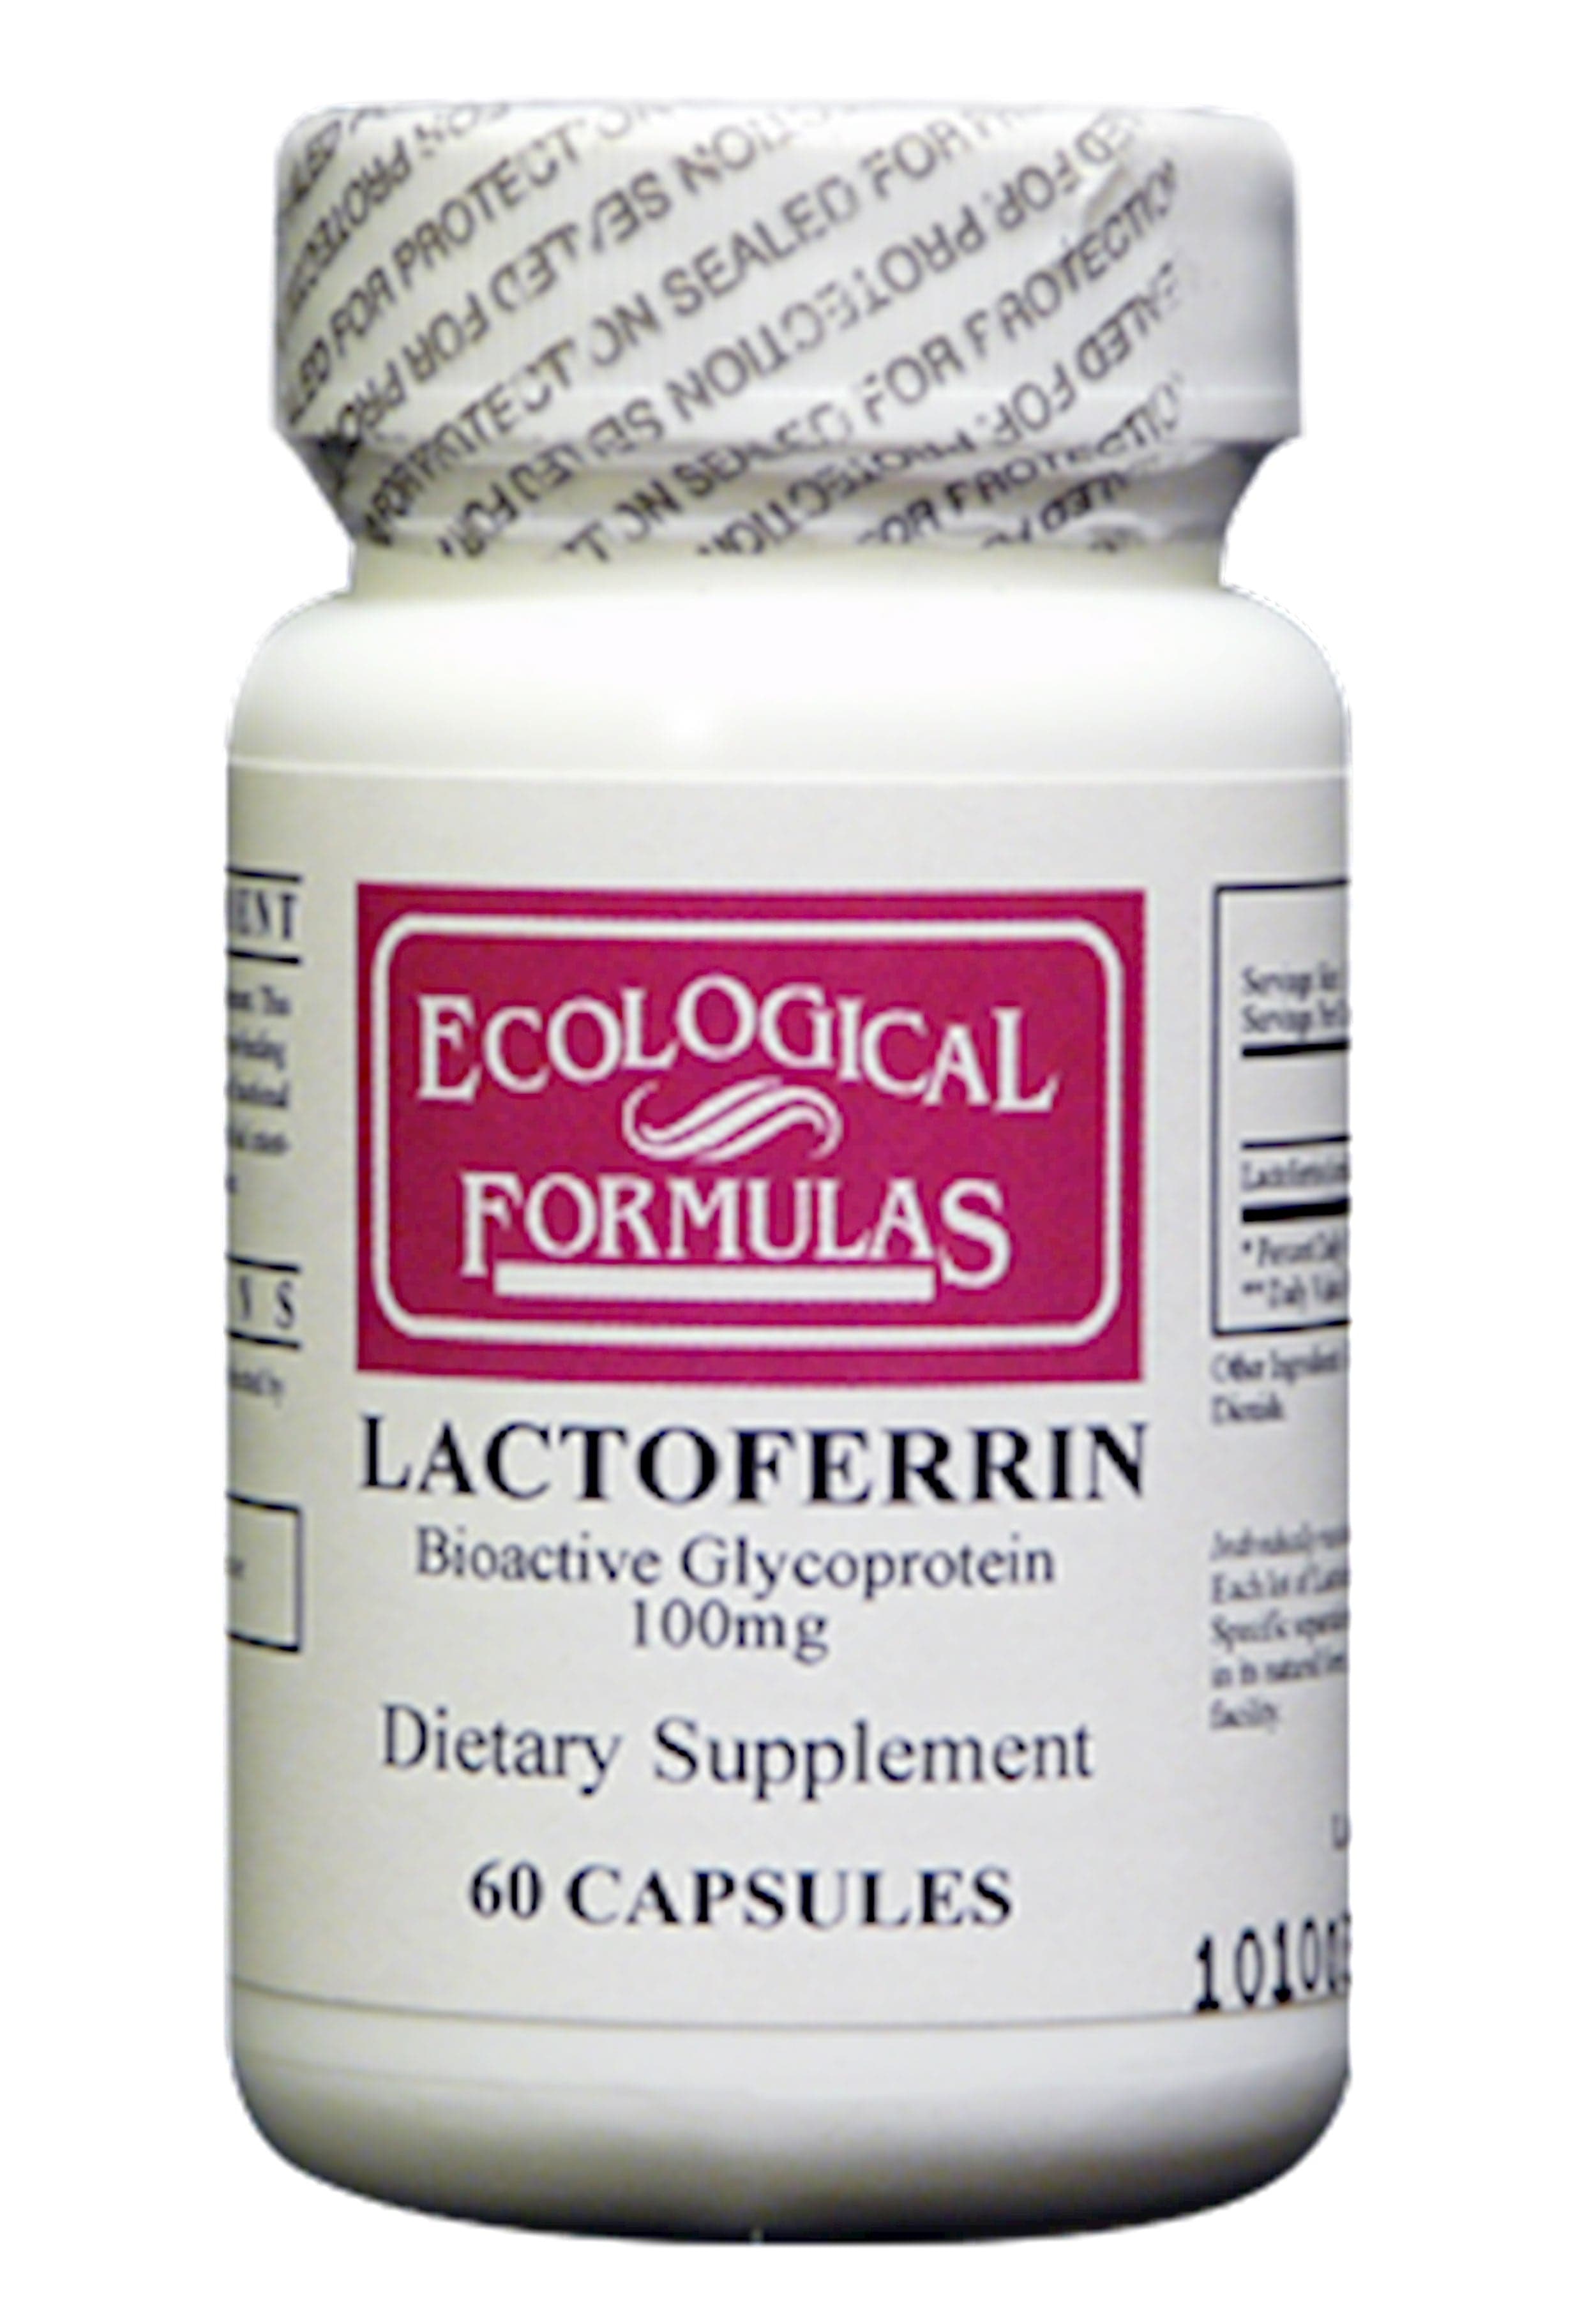 Ecological Formulas/Cardiovascular Research Lactoferrin 100mg